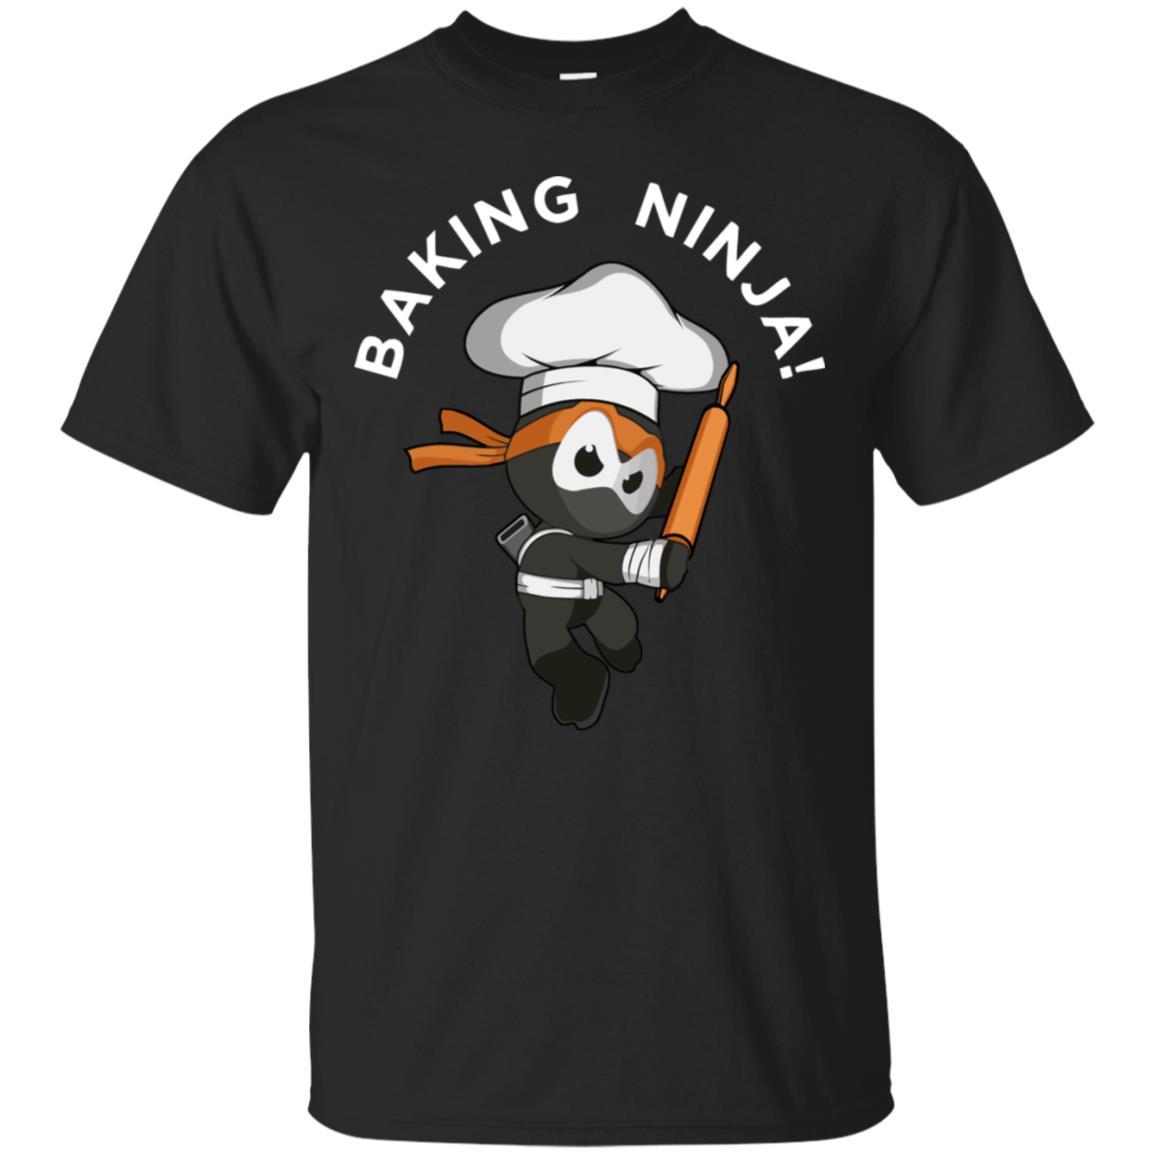 Discover Cool Baking Ninja Shirt, Martial Arts Baker Apparel